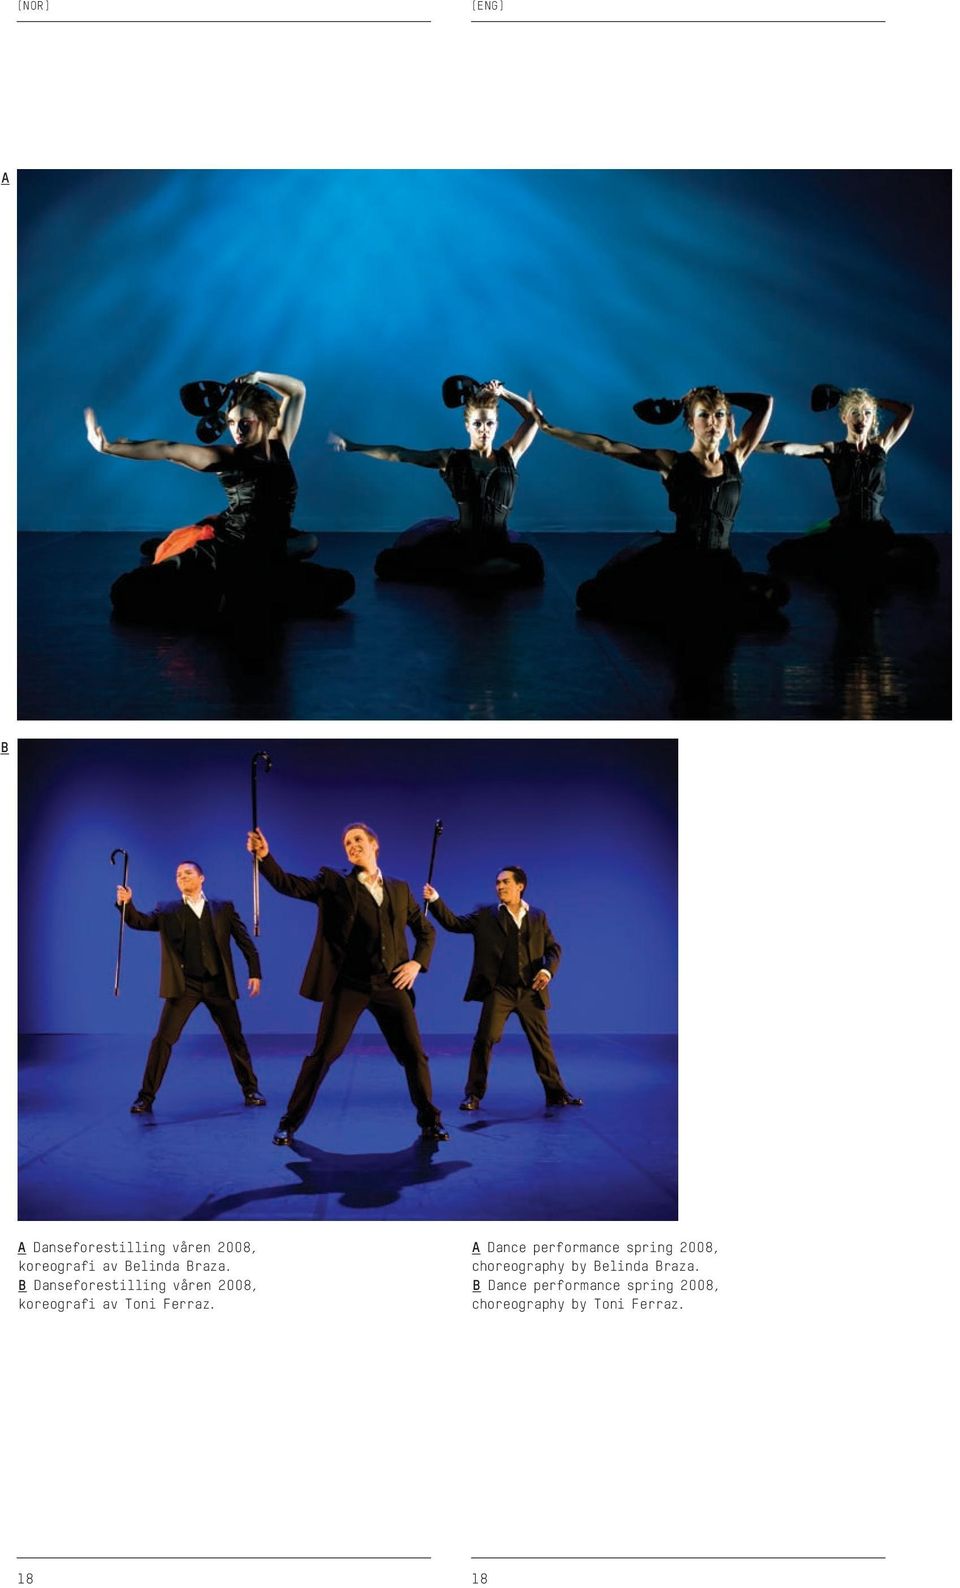 A Dance performance spring 2008, choreography by Belinda Braza.